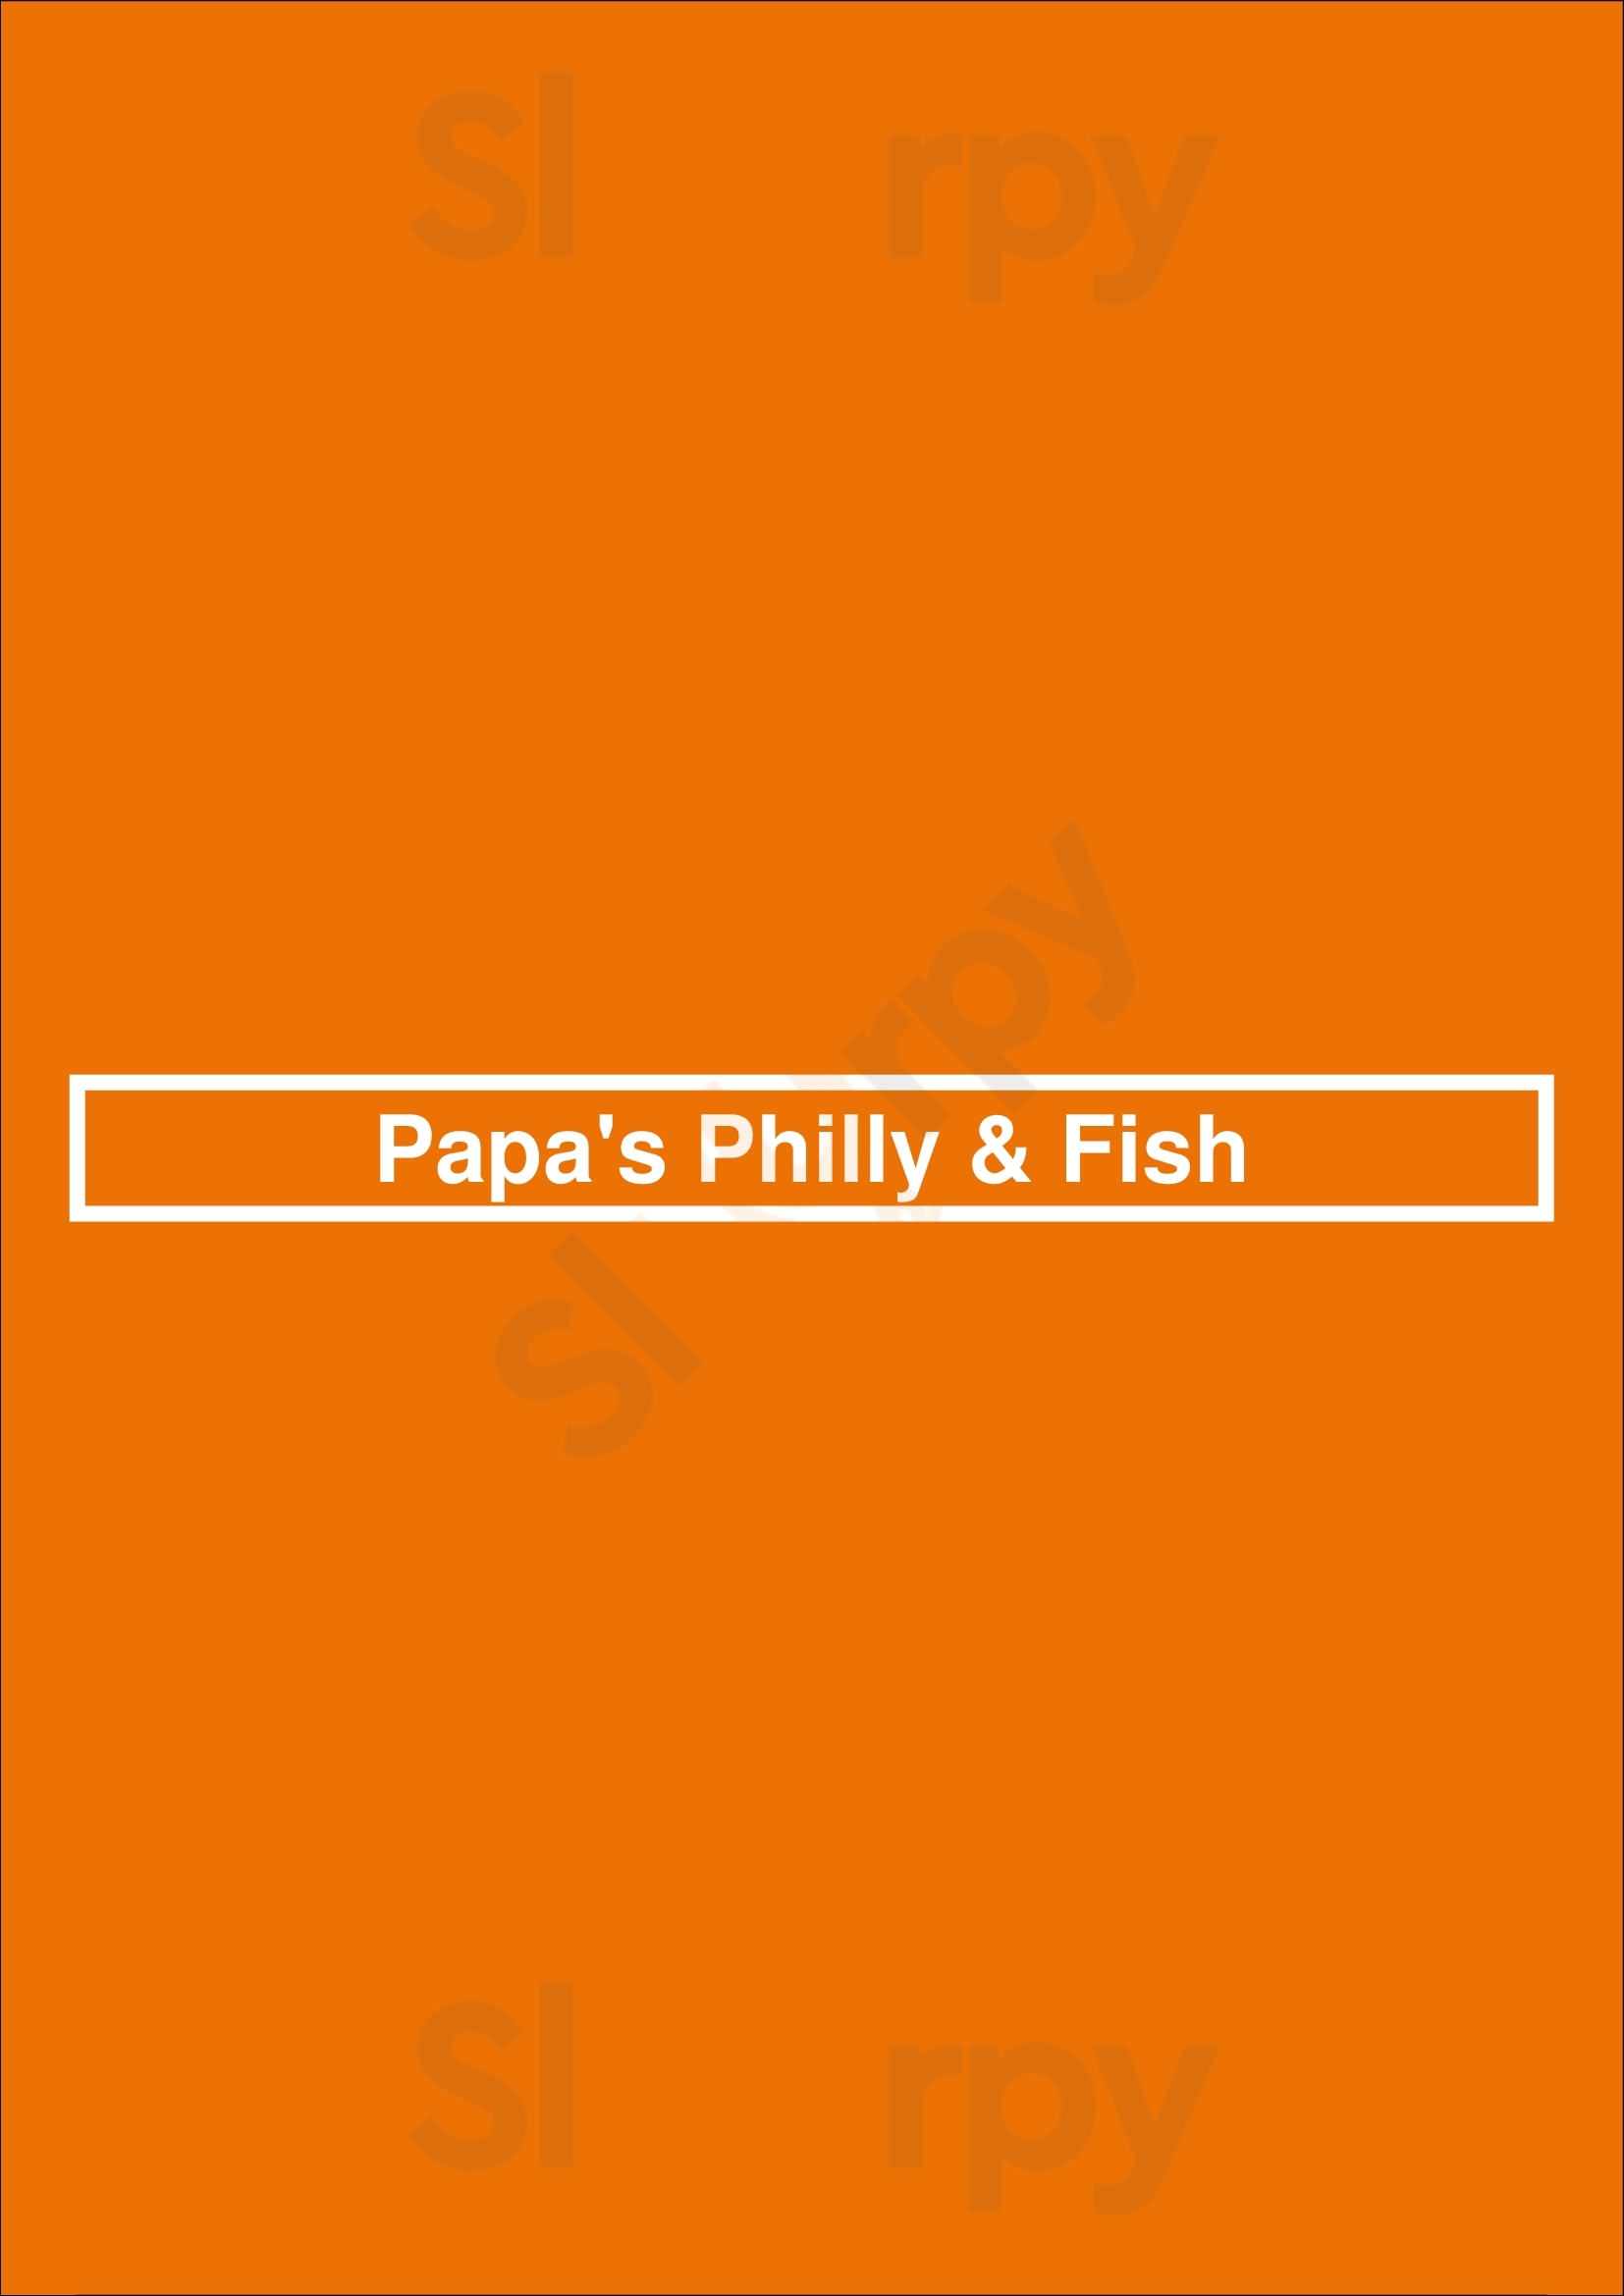 Papa's Philly & Fish Chicago Menu - 1